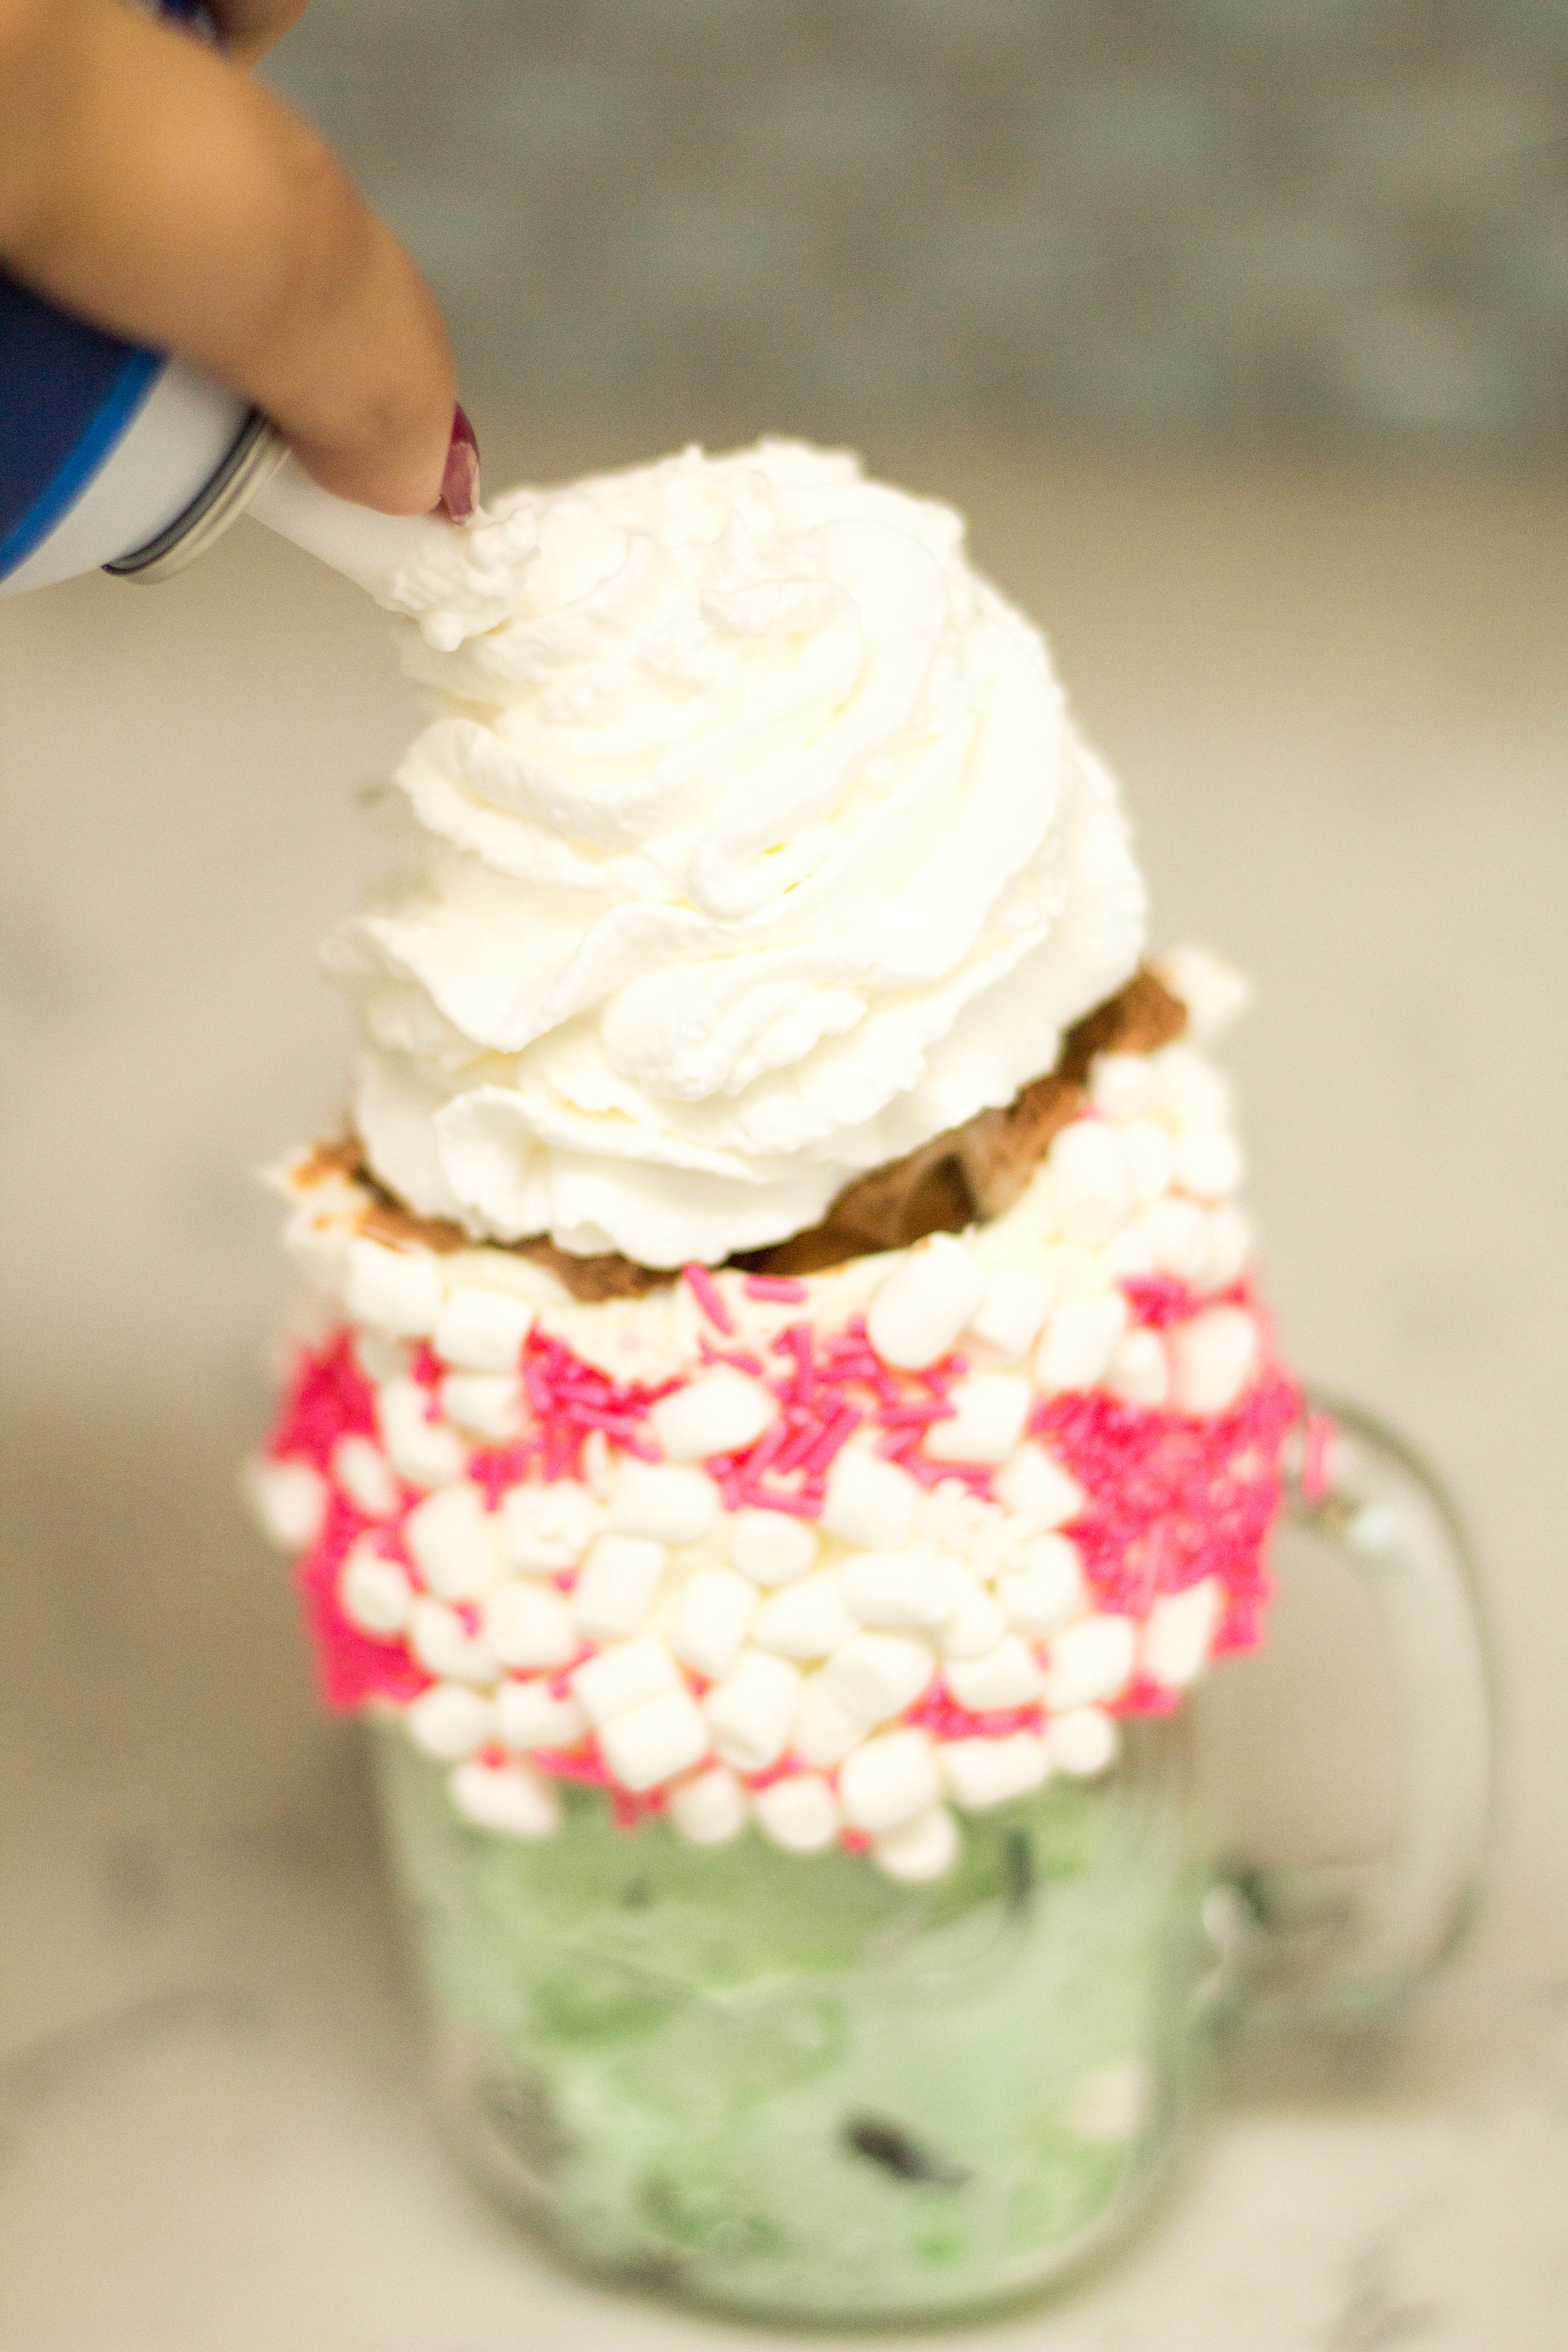 winter-baking-ice-cream-freak-shake-creative-desserts-overload-19